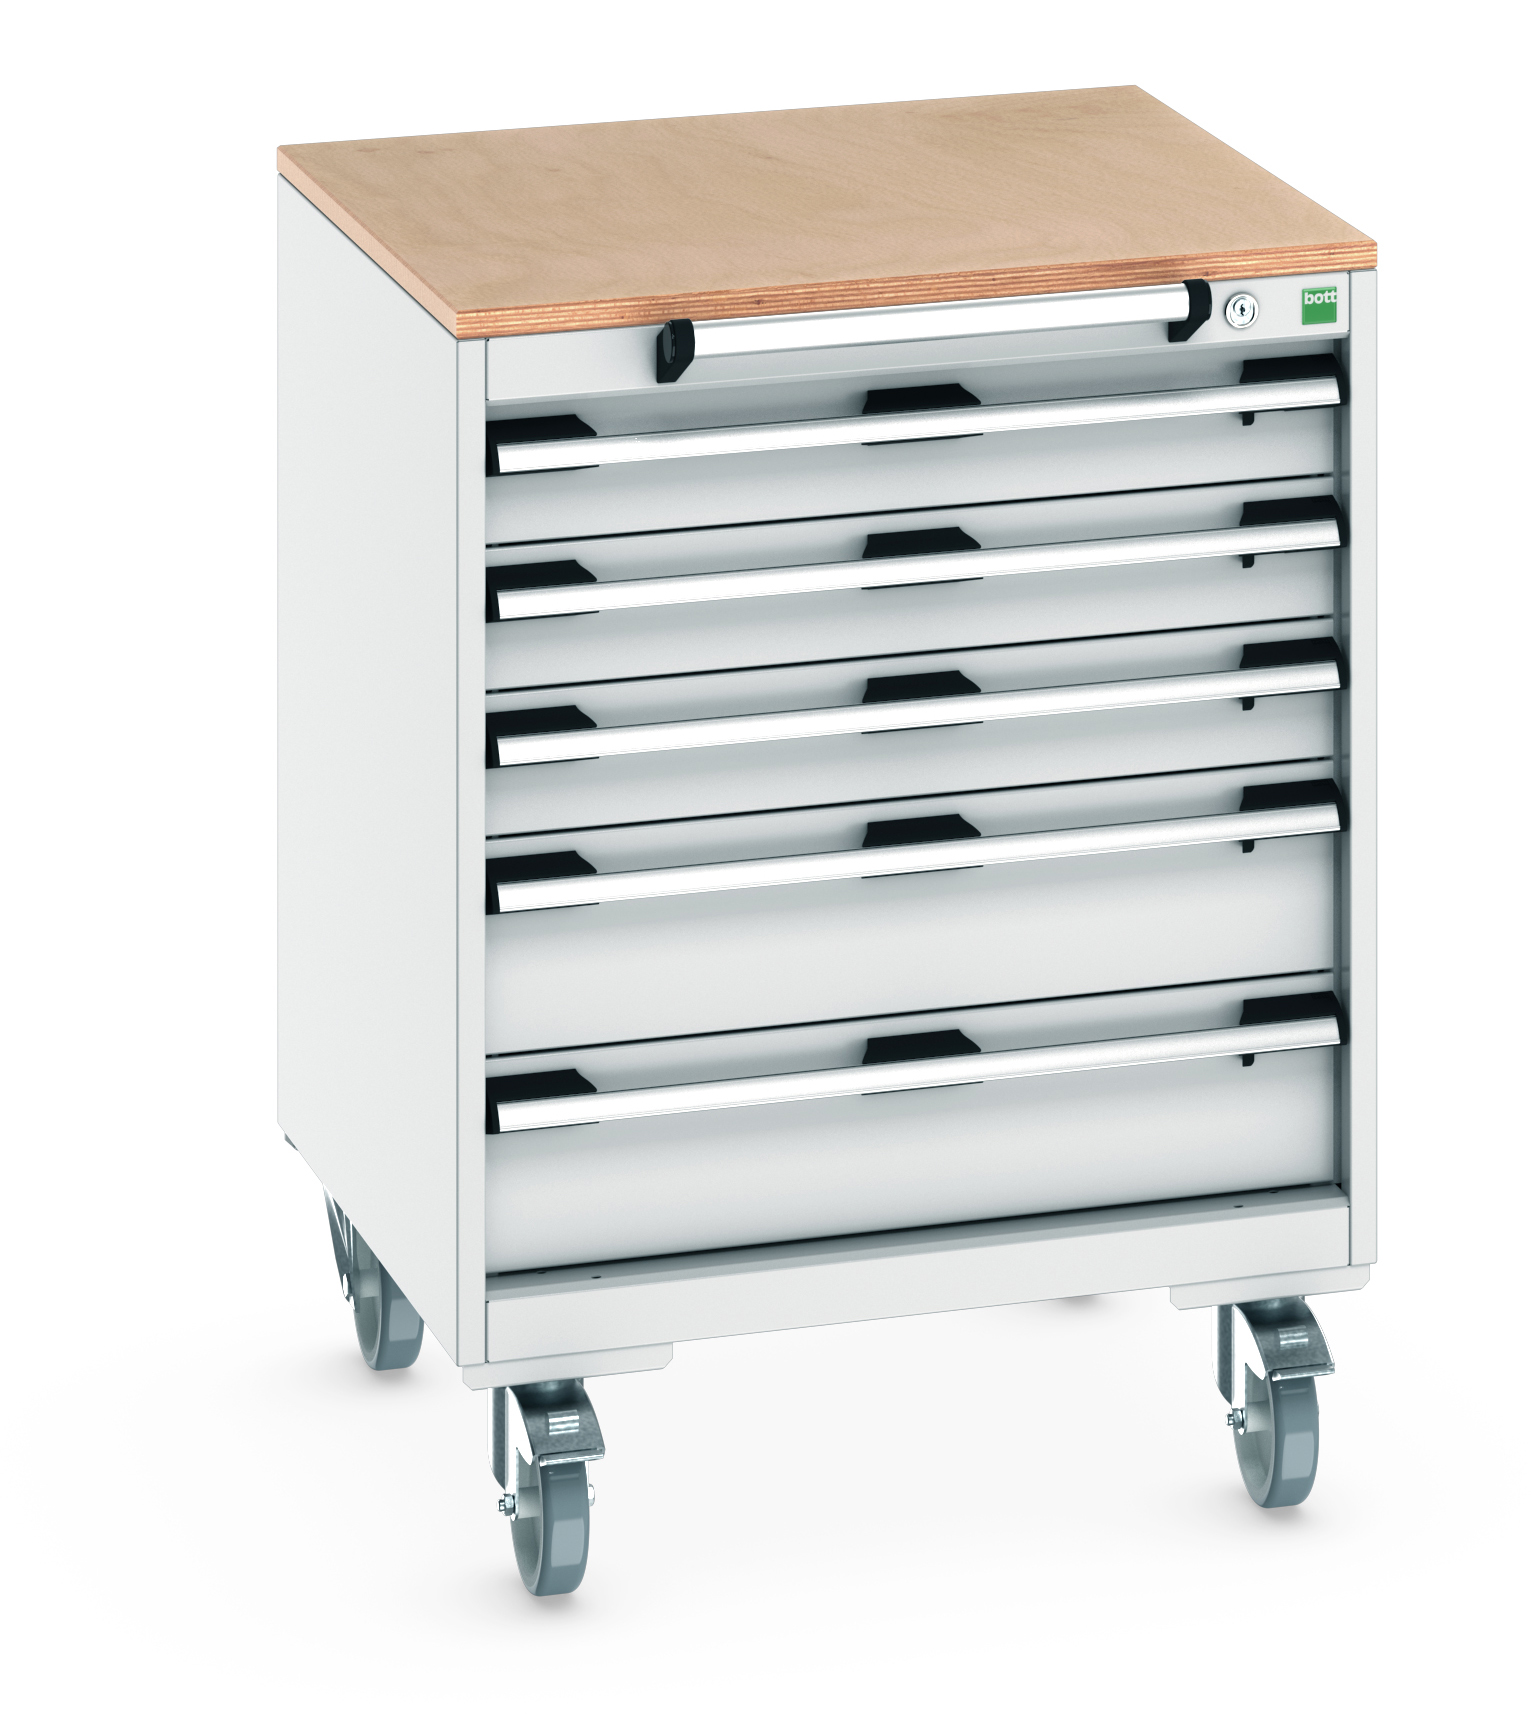 Bott Cubio Mobile Drawer Cabinet With 5 Drawers & Multiplex Worktop - 40402147.16V